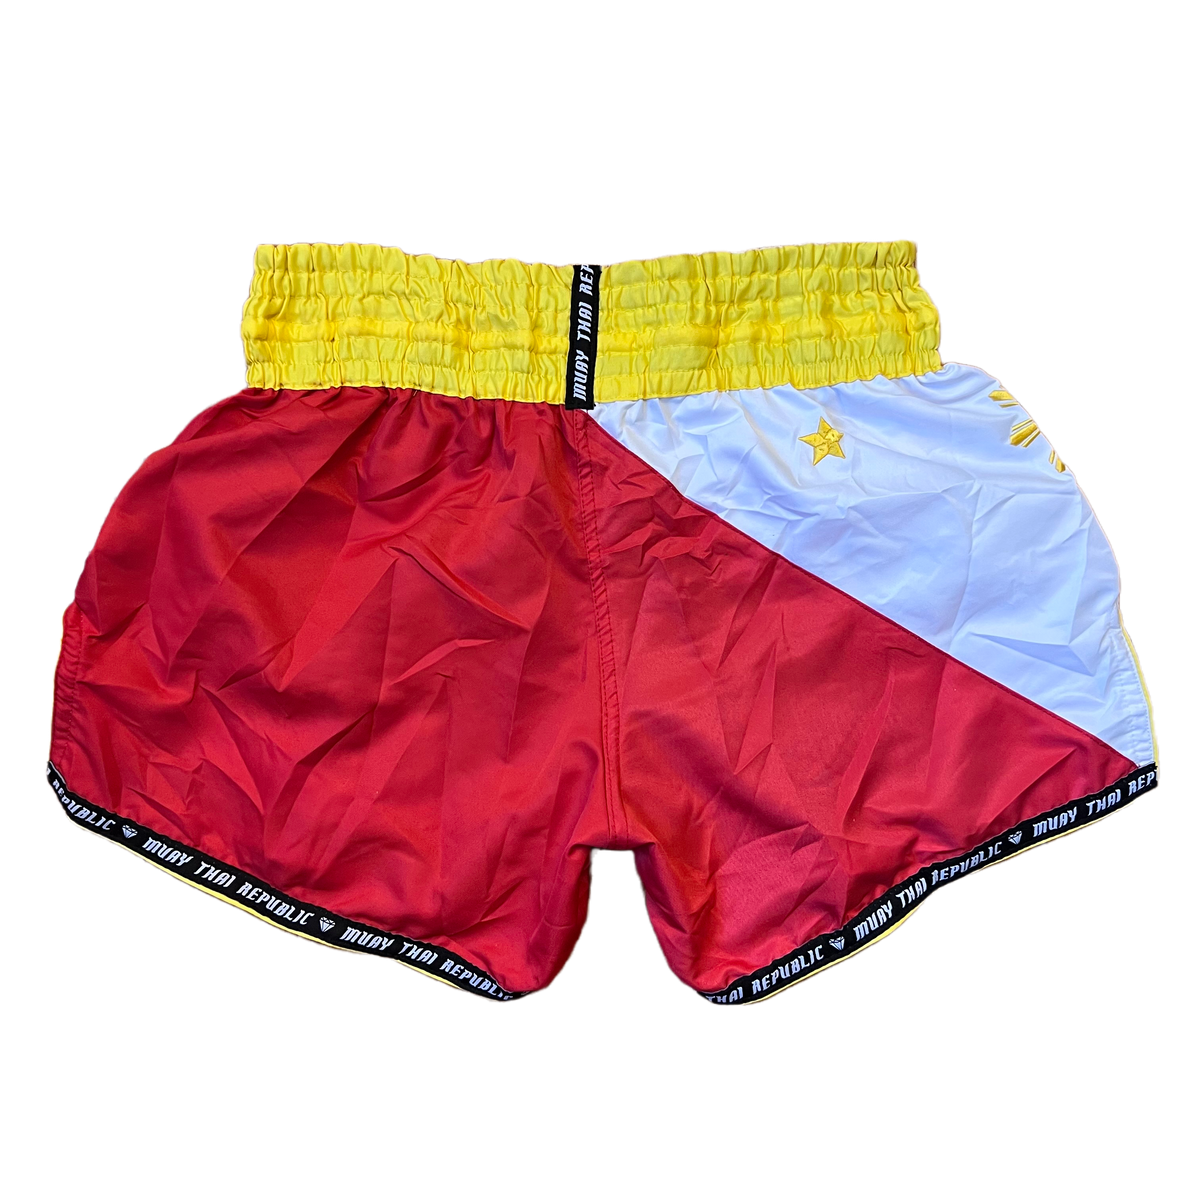 The Philippines F-SPORT Muay Thai Shorts